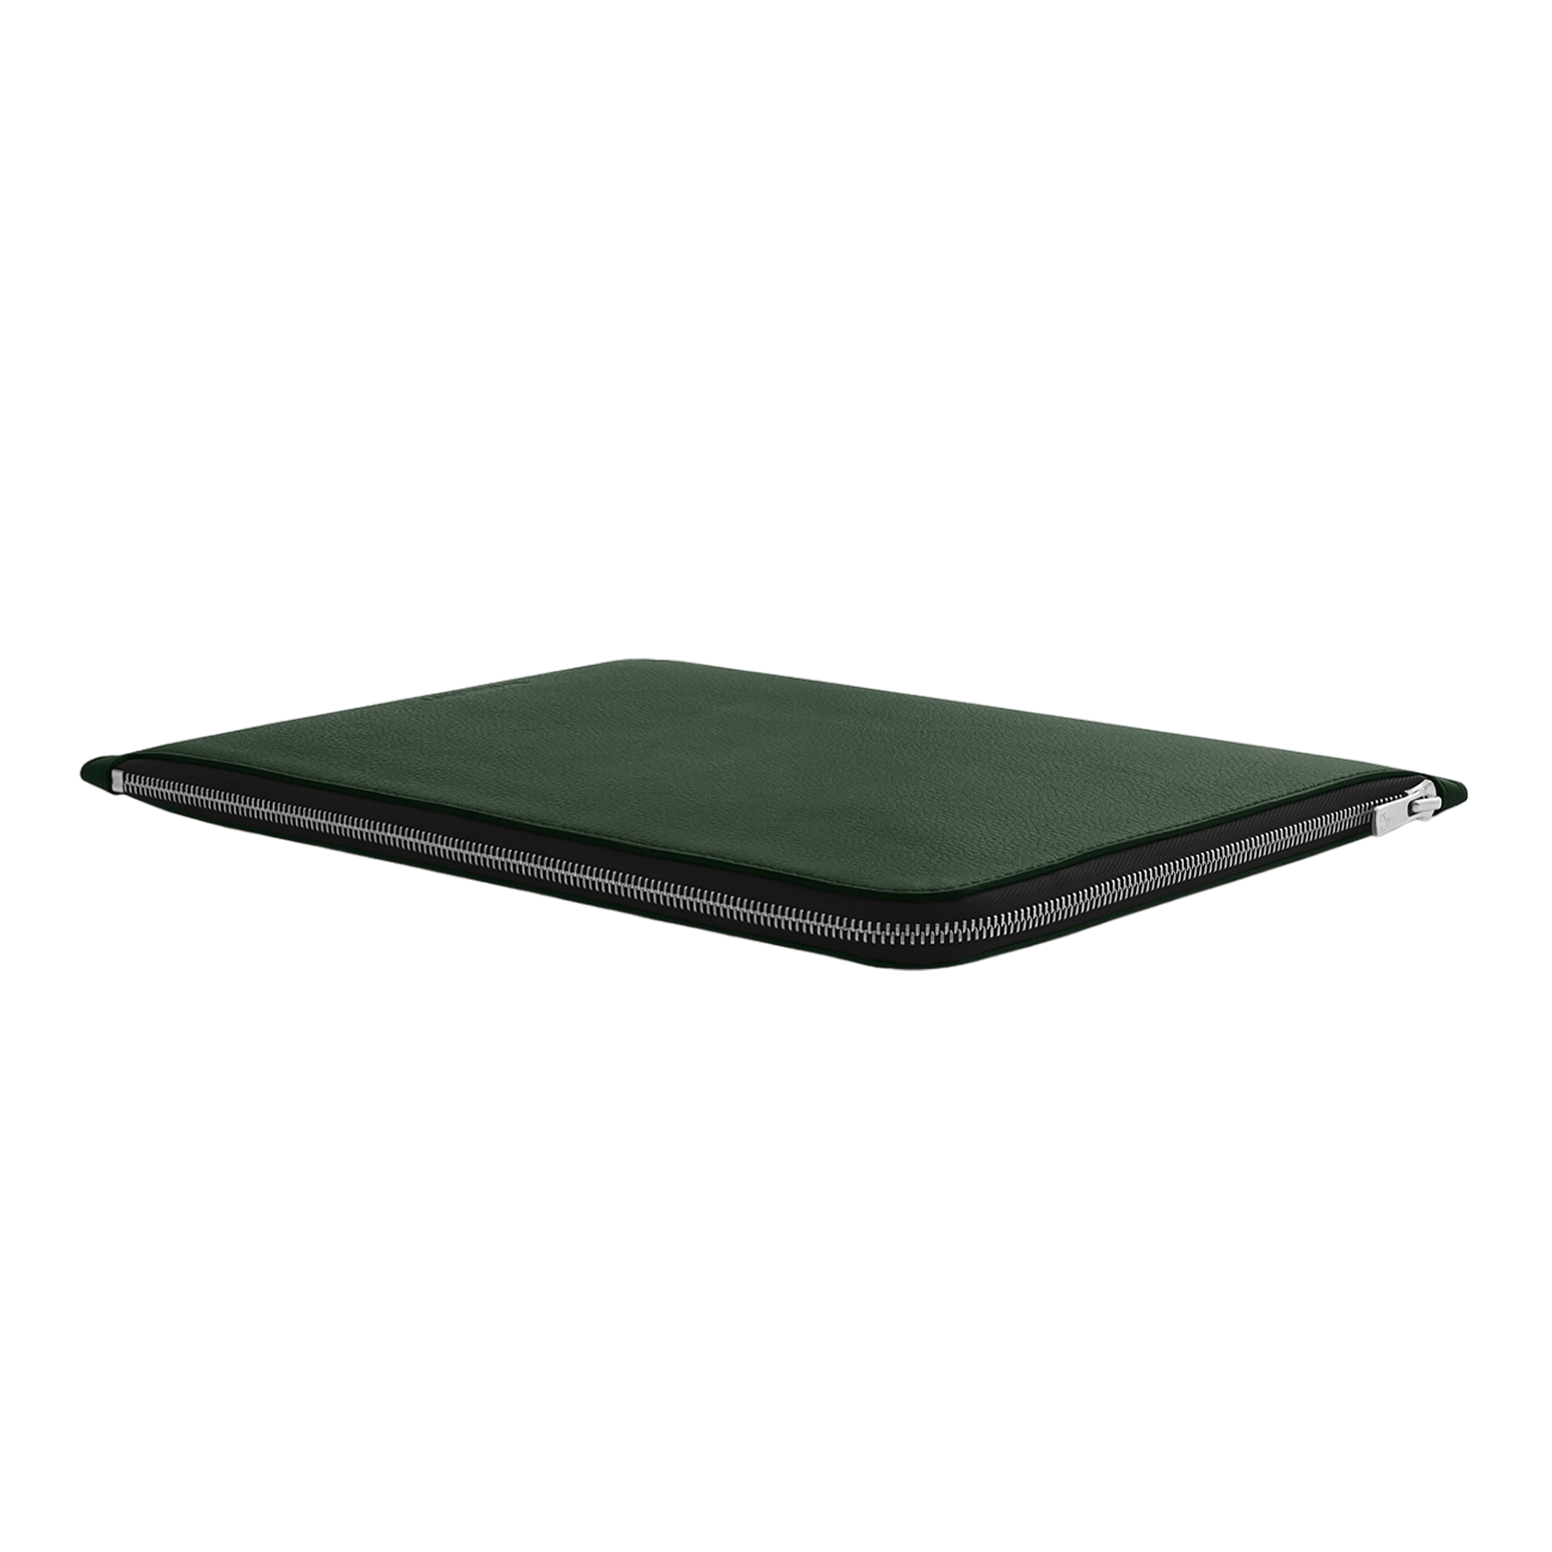 WOOLNUT Leather Folio for 13/14-inch MacBook - Green